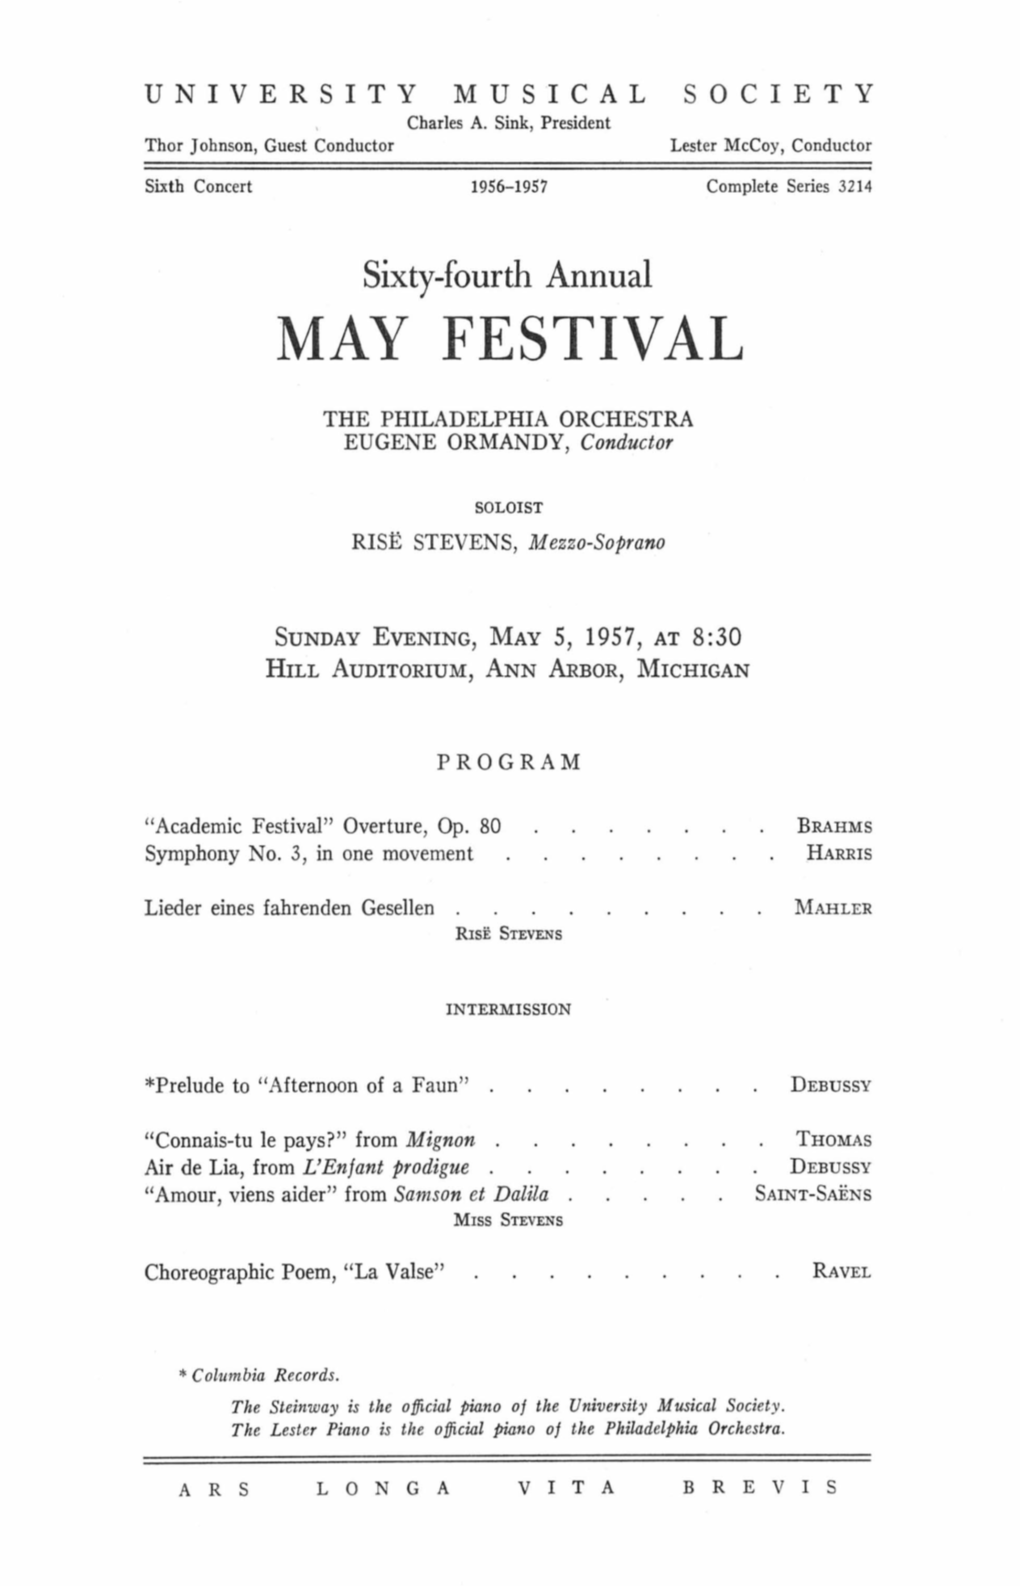 May Festival